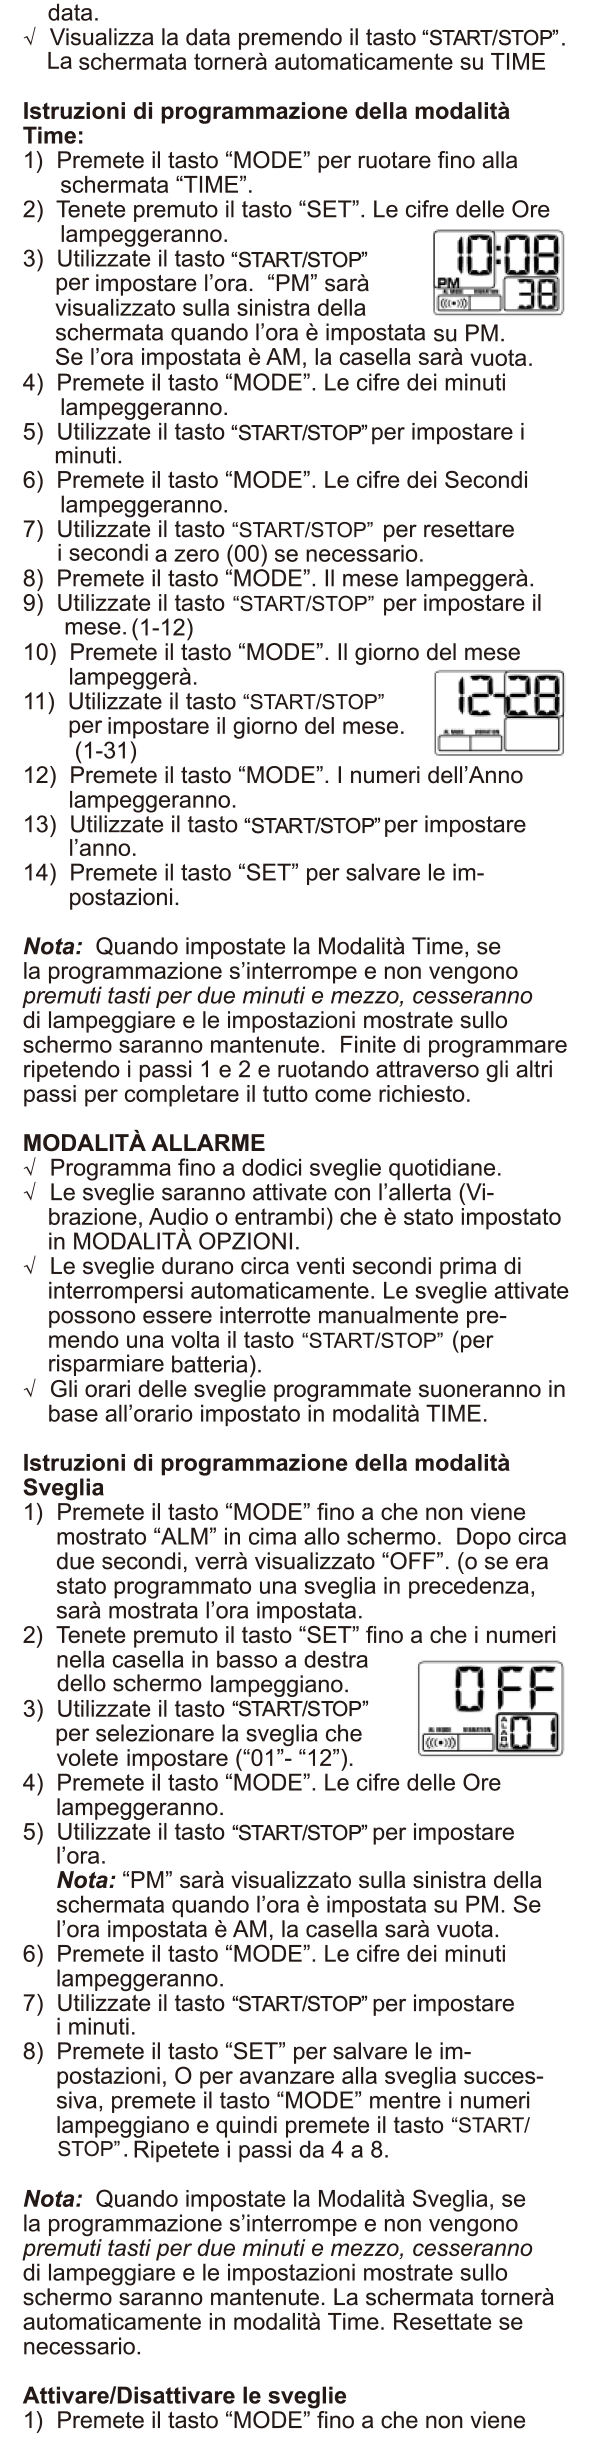 vibralite-mini-italian-instruction-manual-page-2